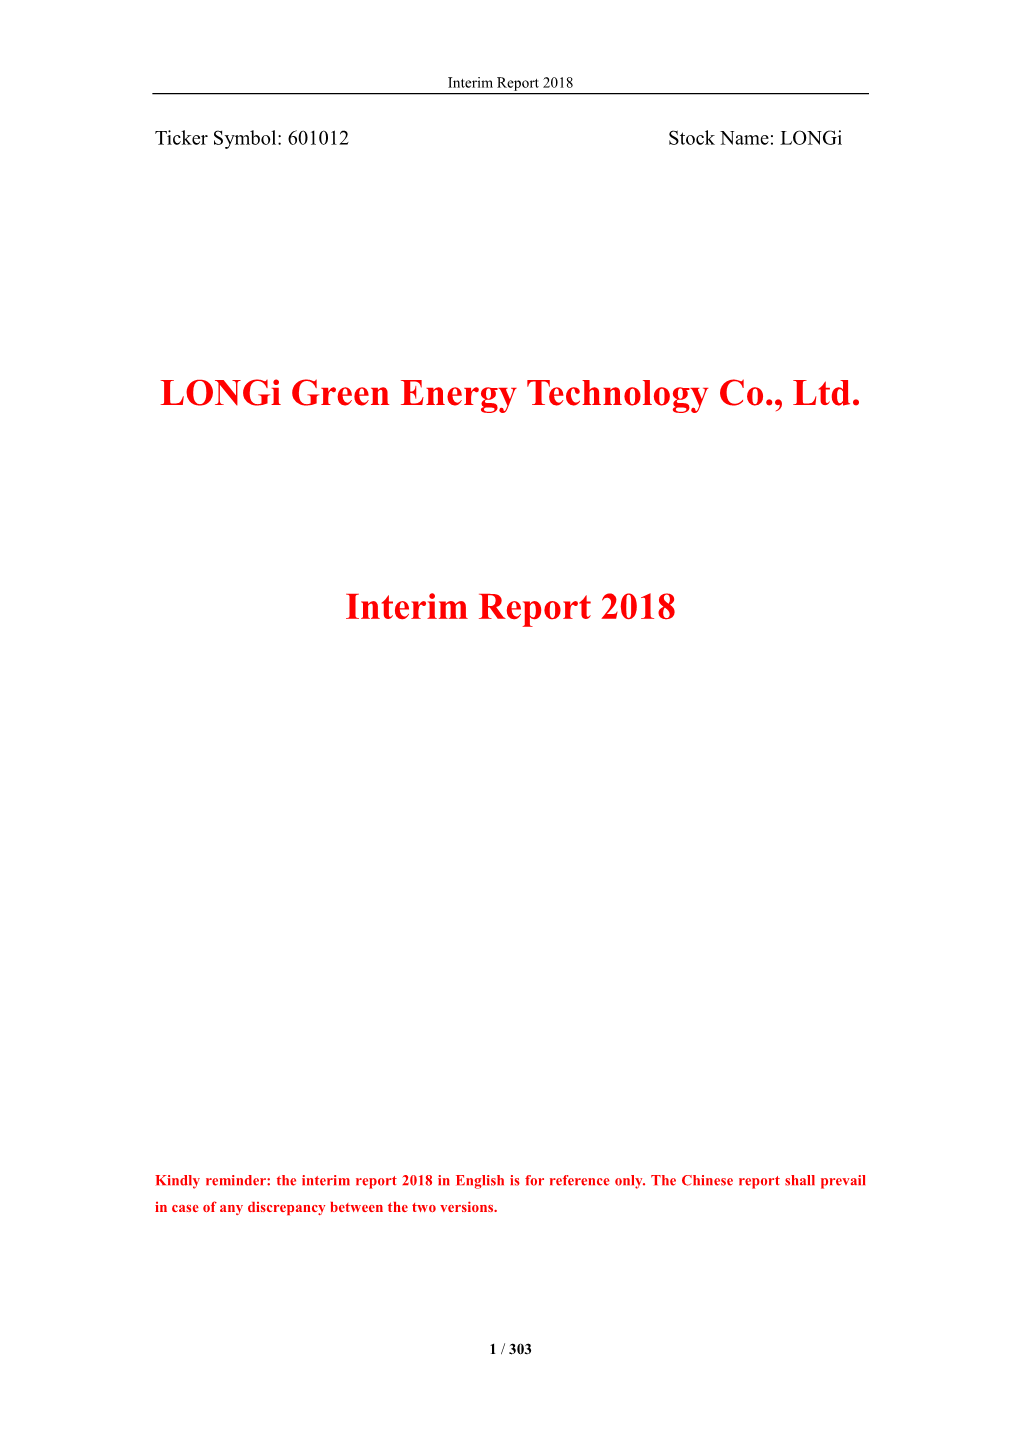 Longi Interim Report 2018